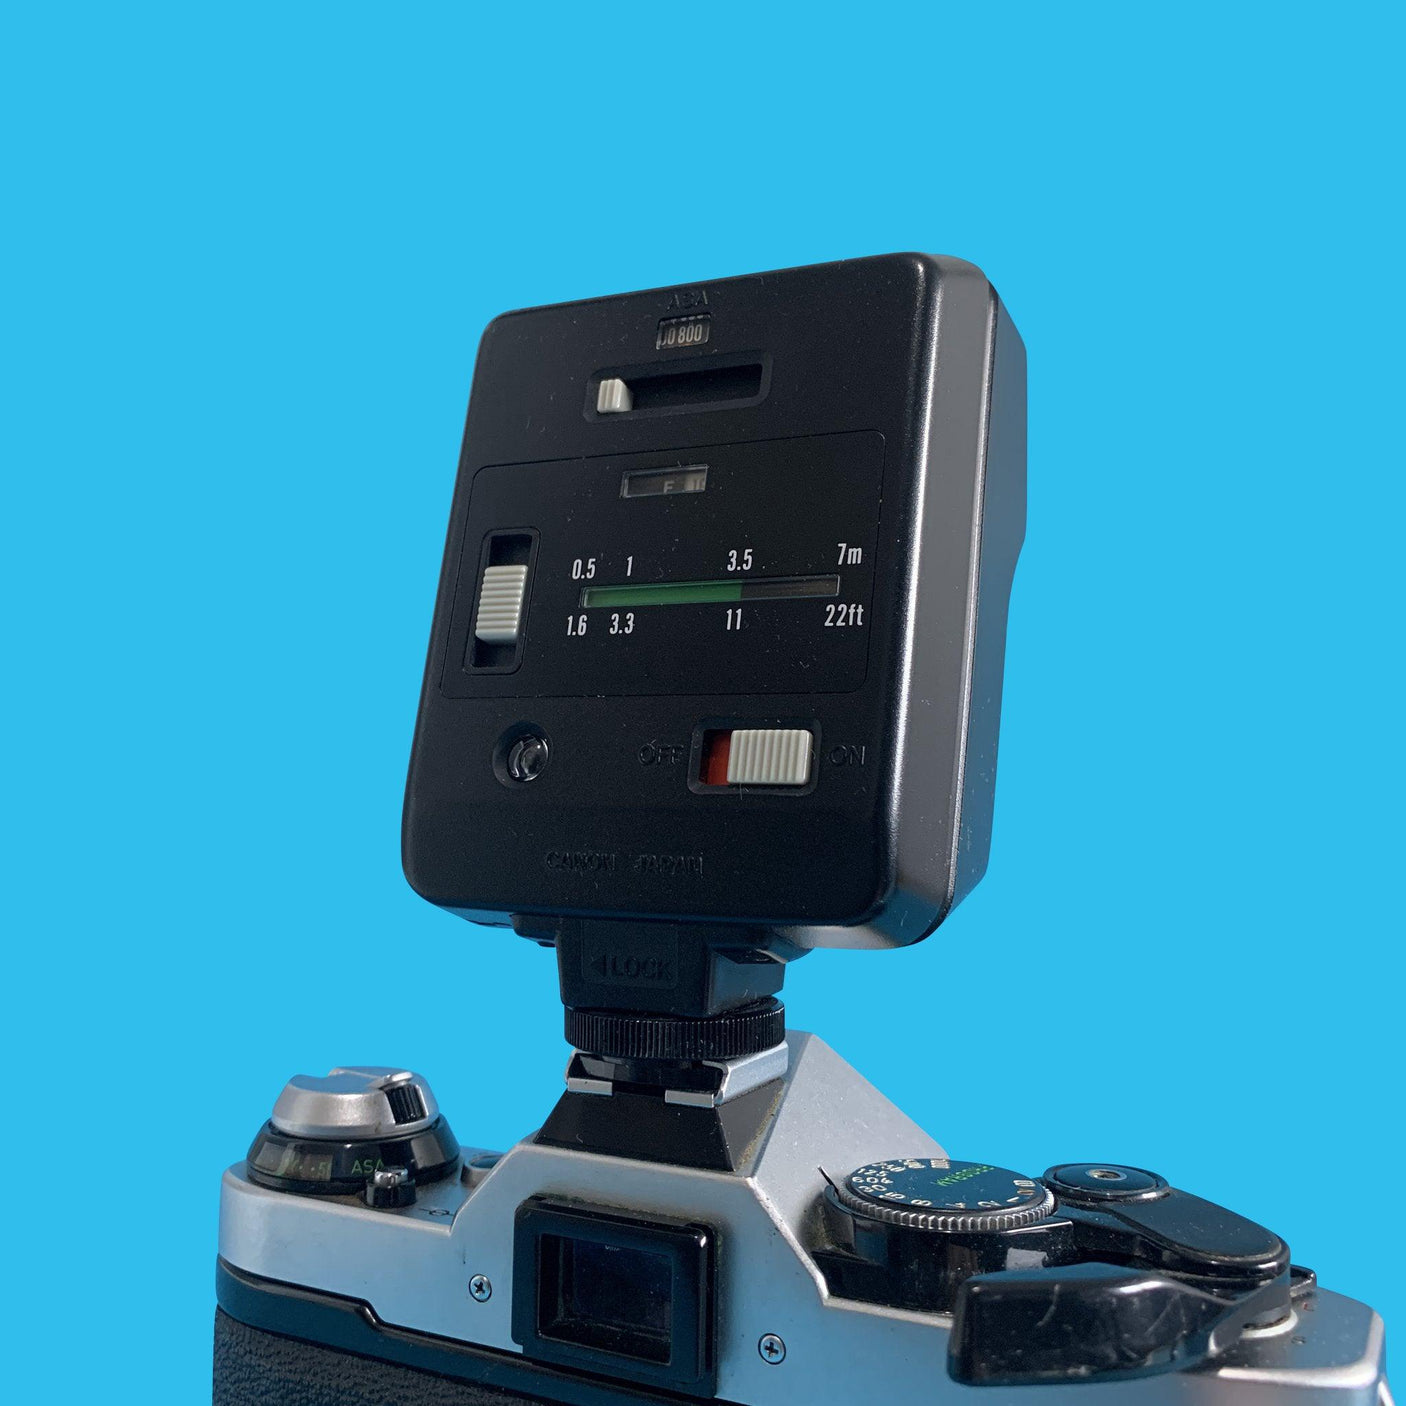 Canon SpeedLite 166A External Flash Unit for 35mm Film Camera